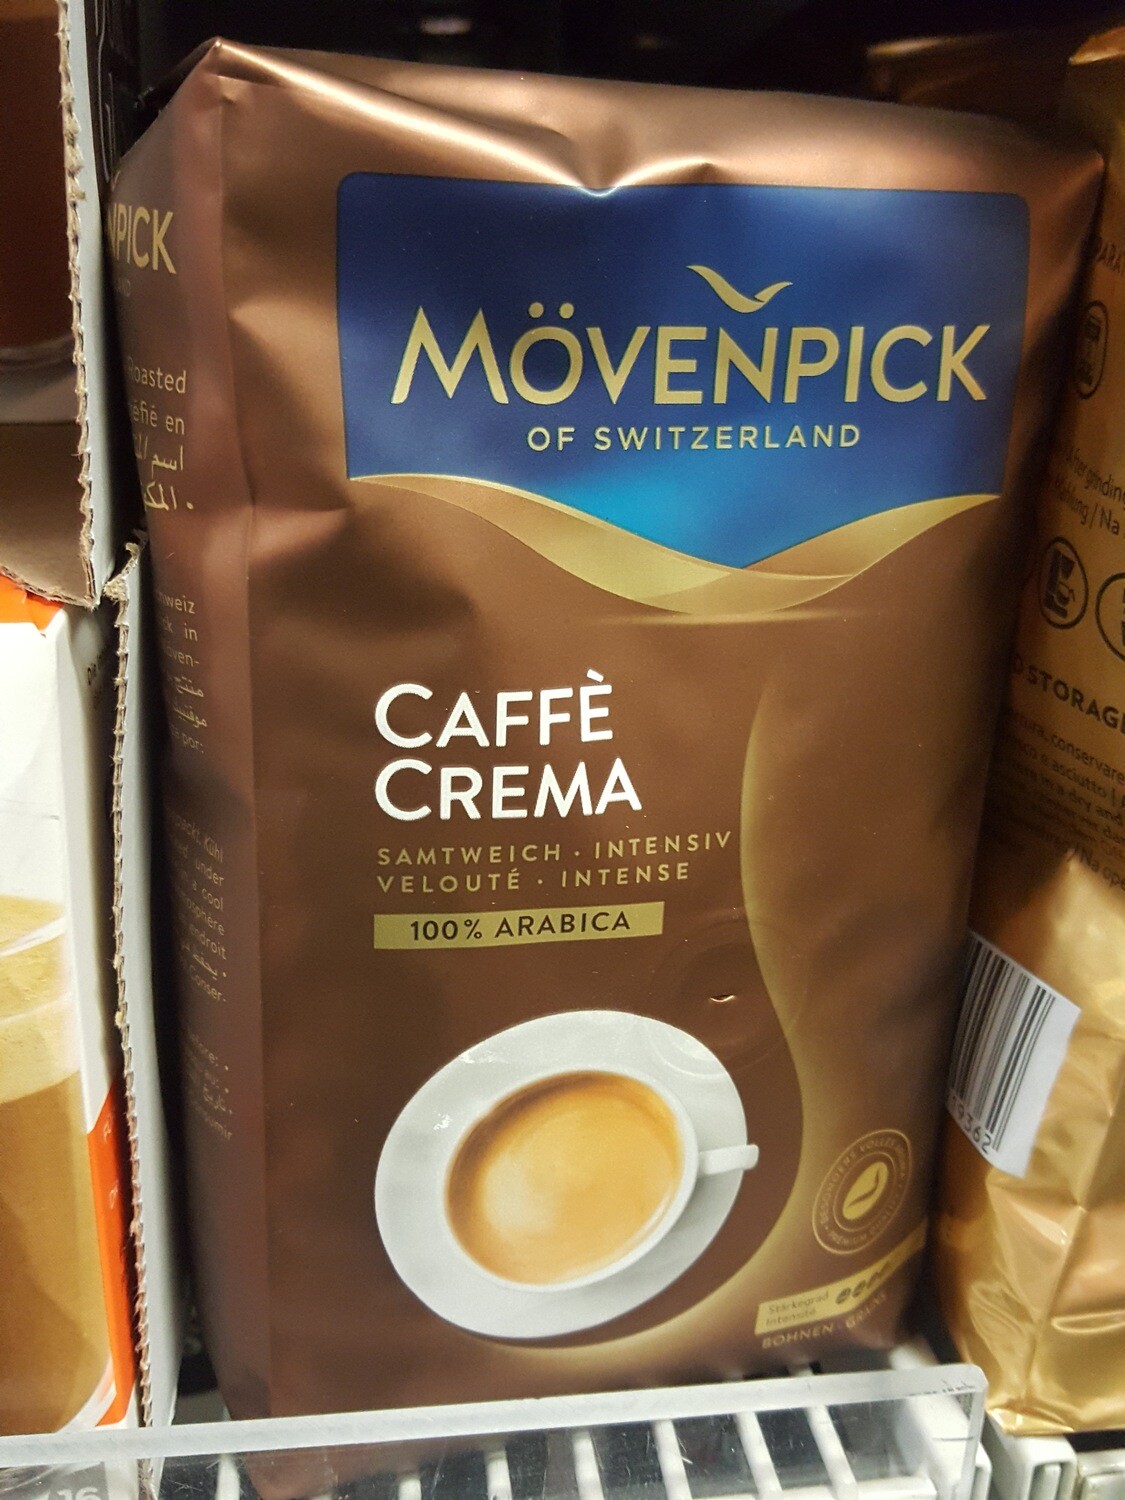 Mövenpick Caffè Crema Grains 1x500g